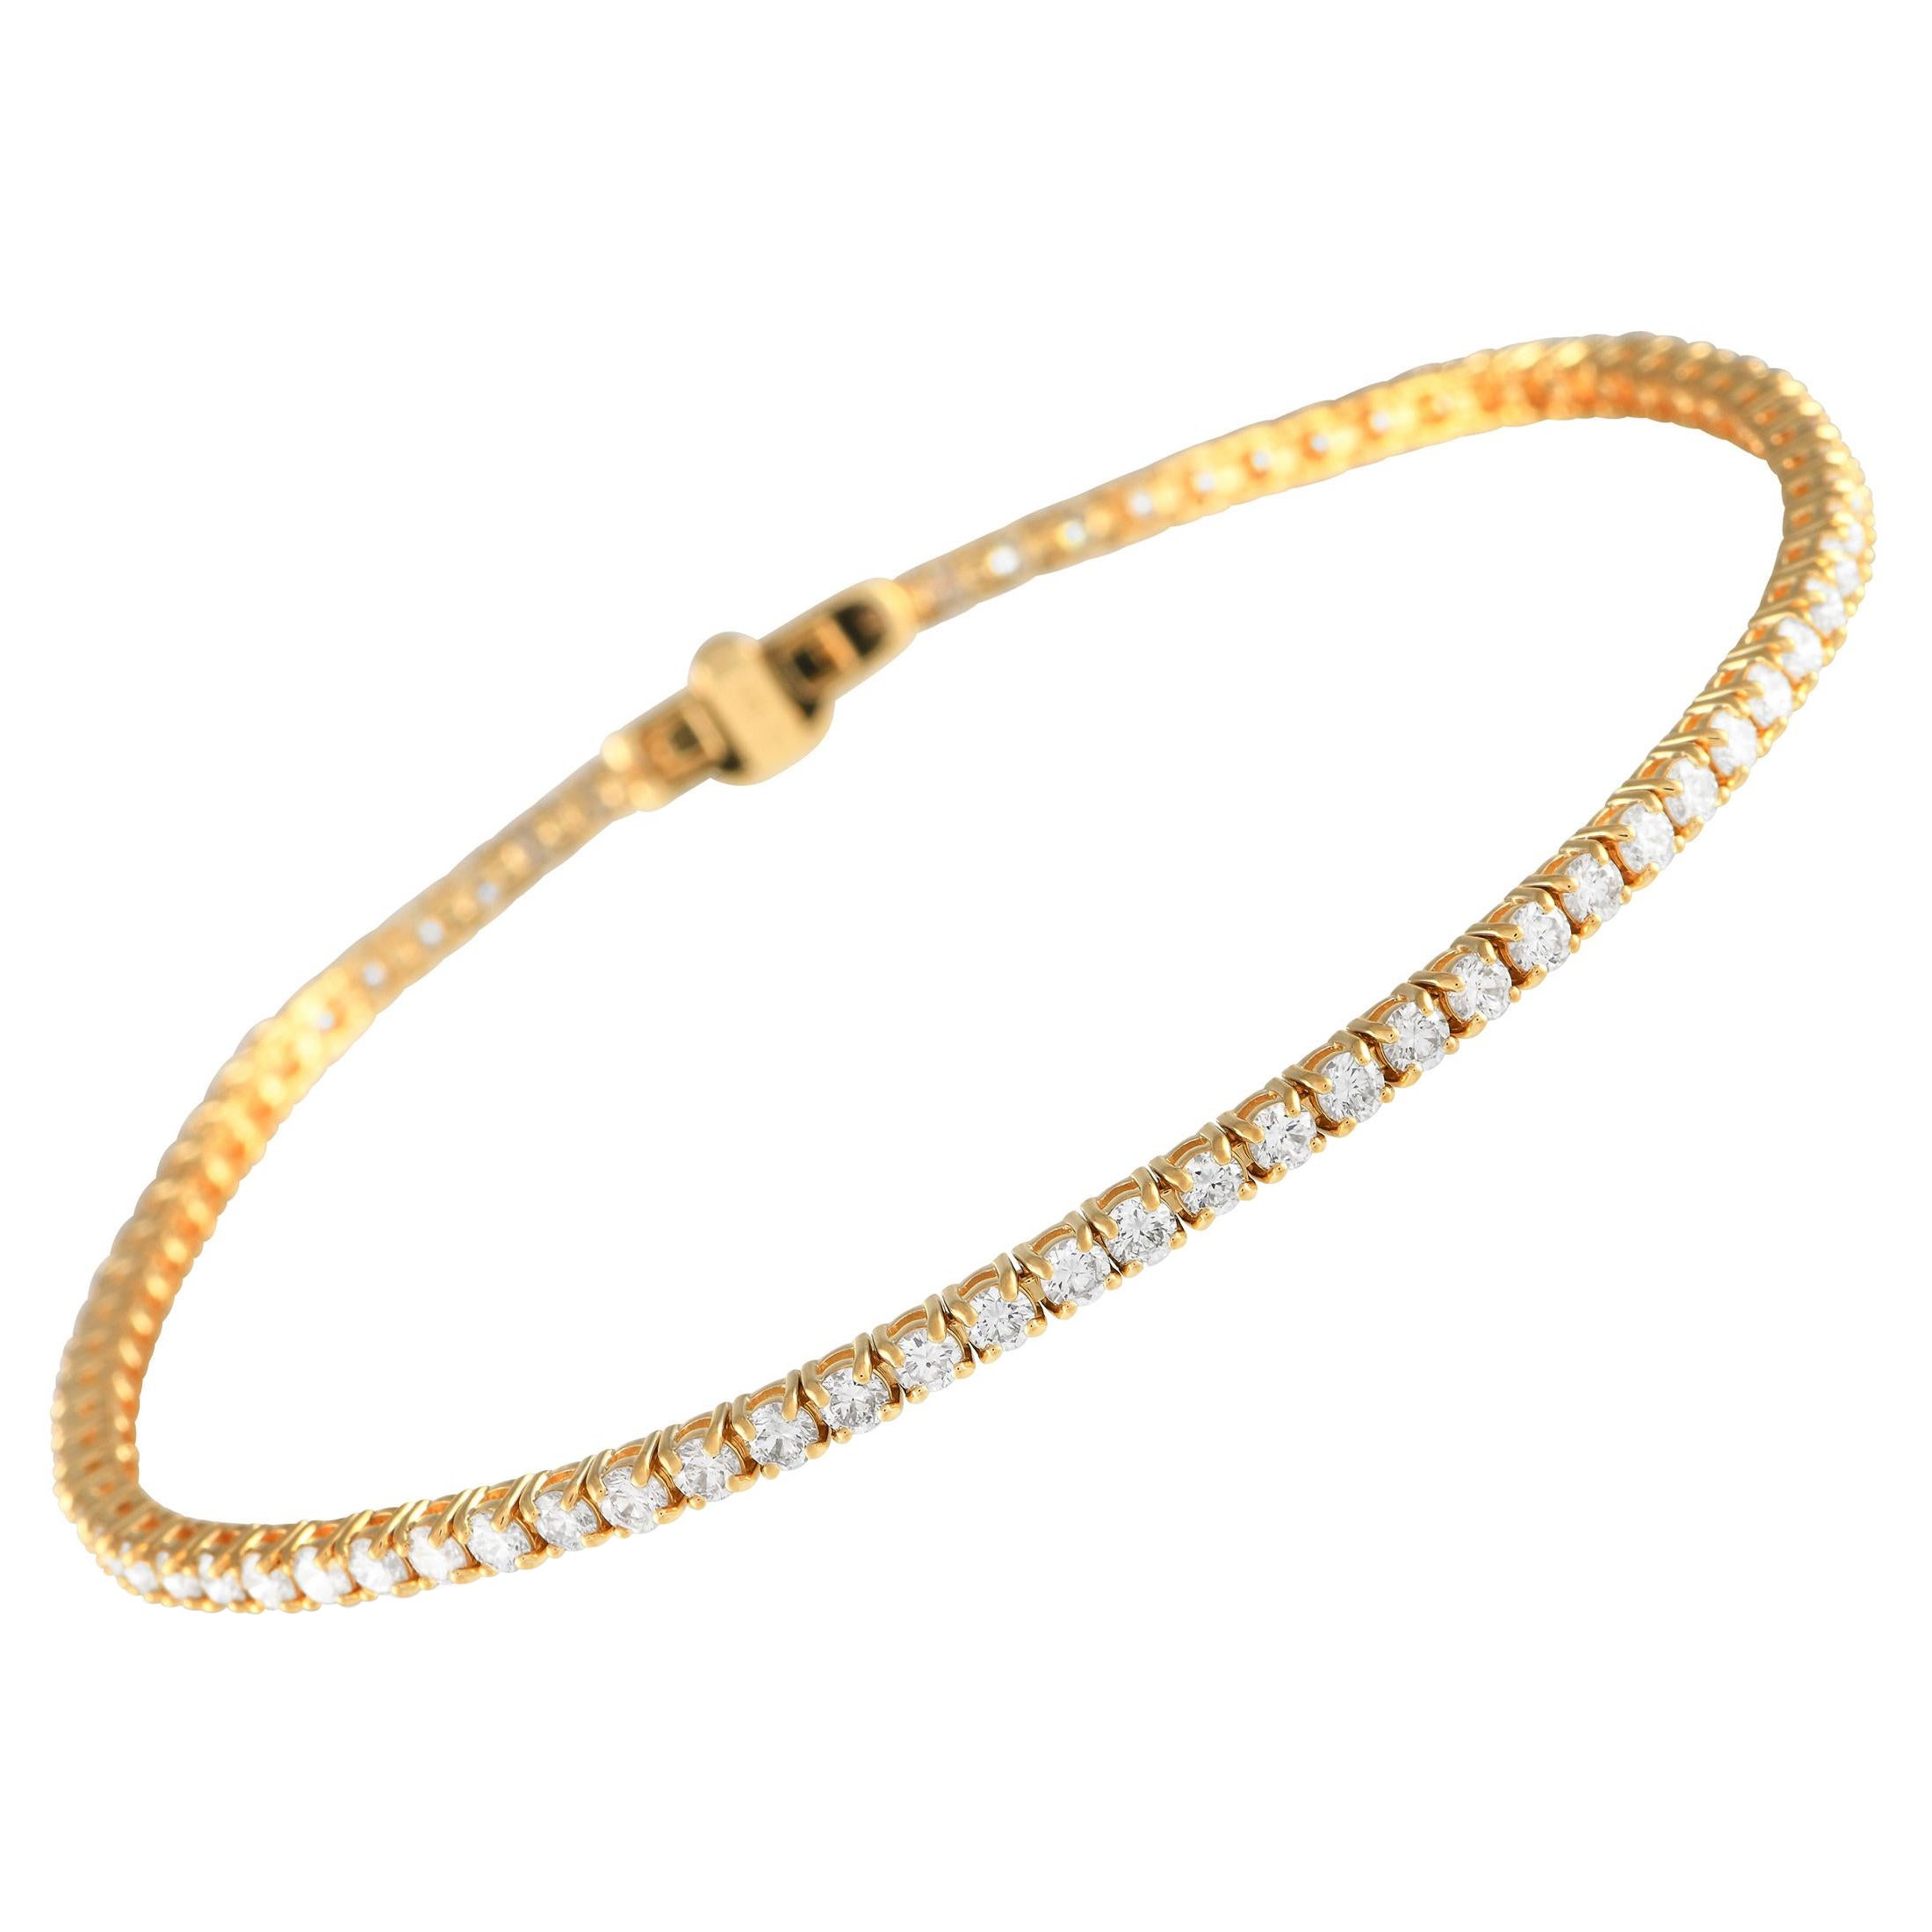 LB Exclusive 18K Yellow Gold 3.03ct Diamond Tennis Bracelet MF13-121823